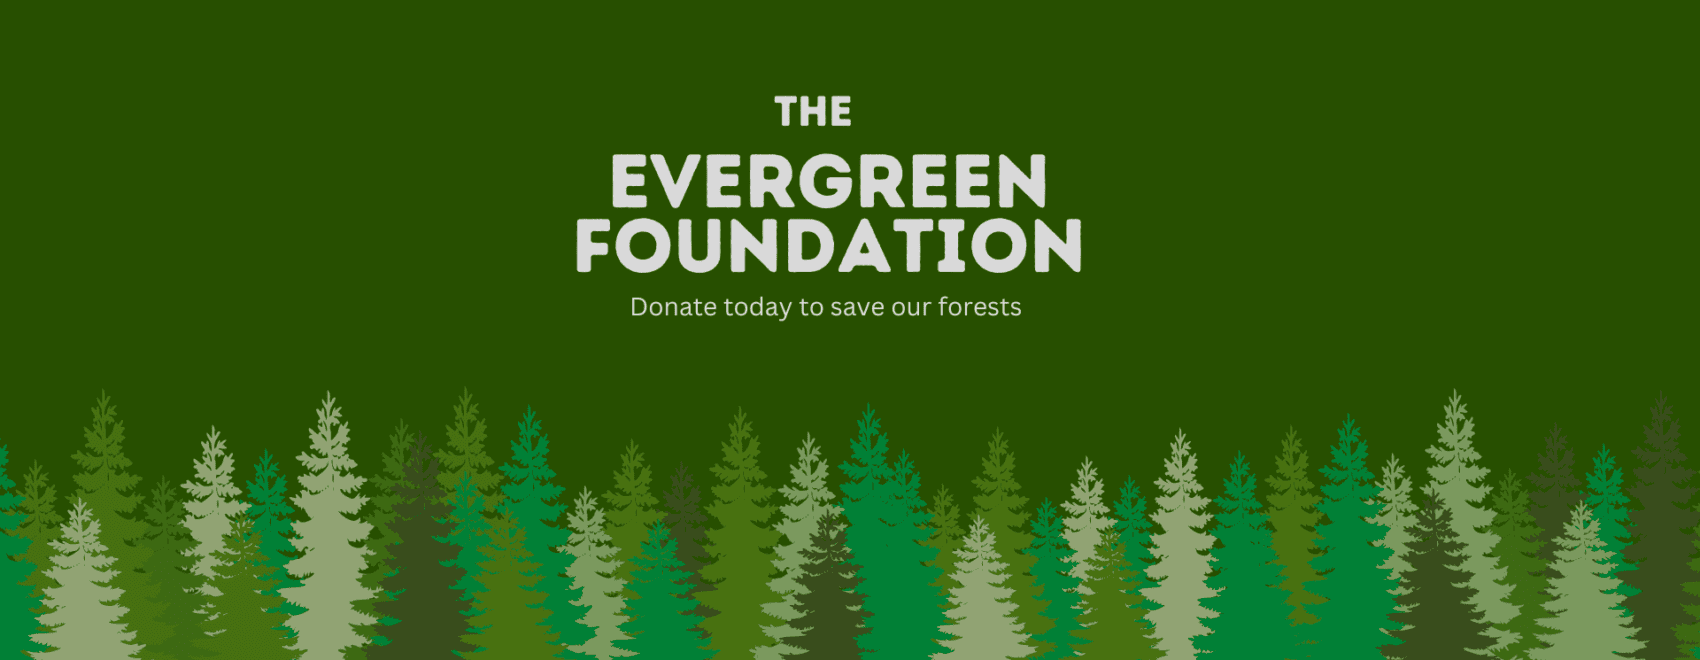 Evergreen Foundation Crowdfunding